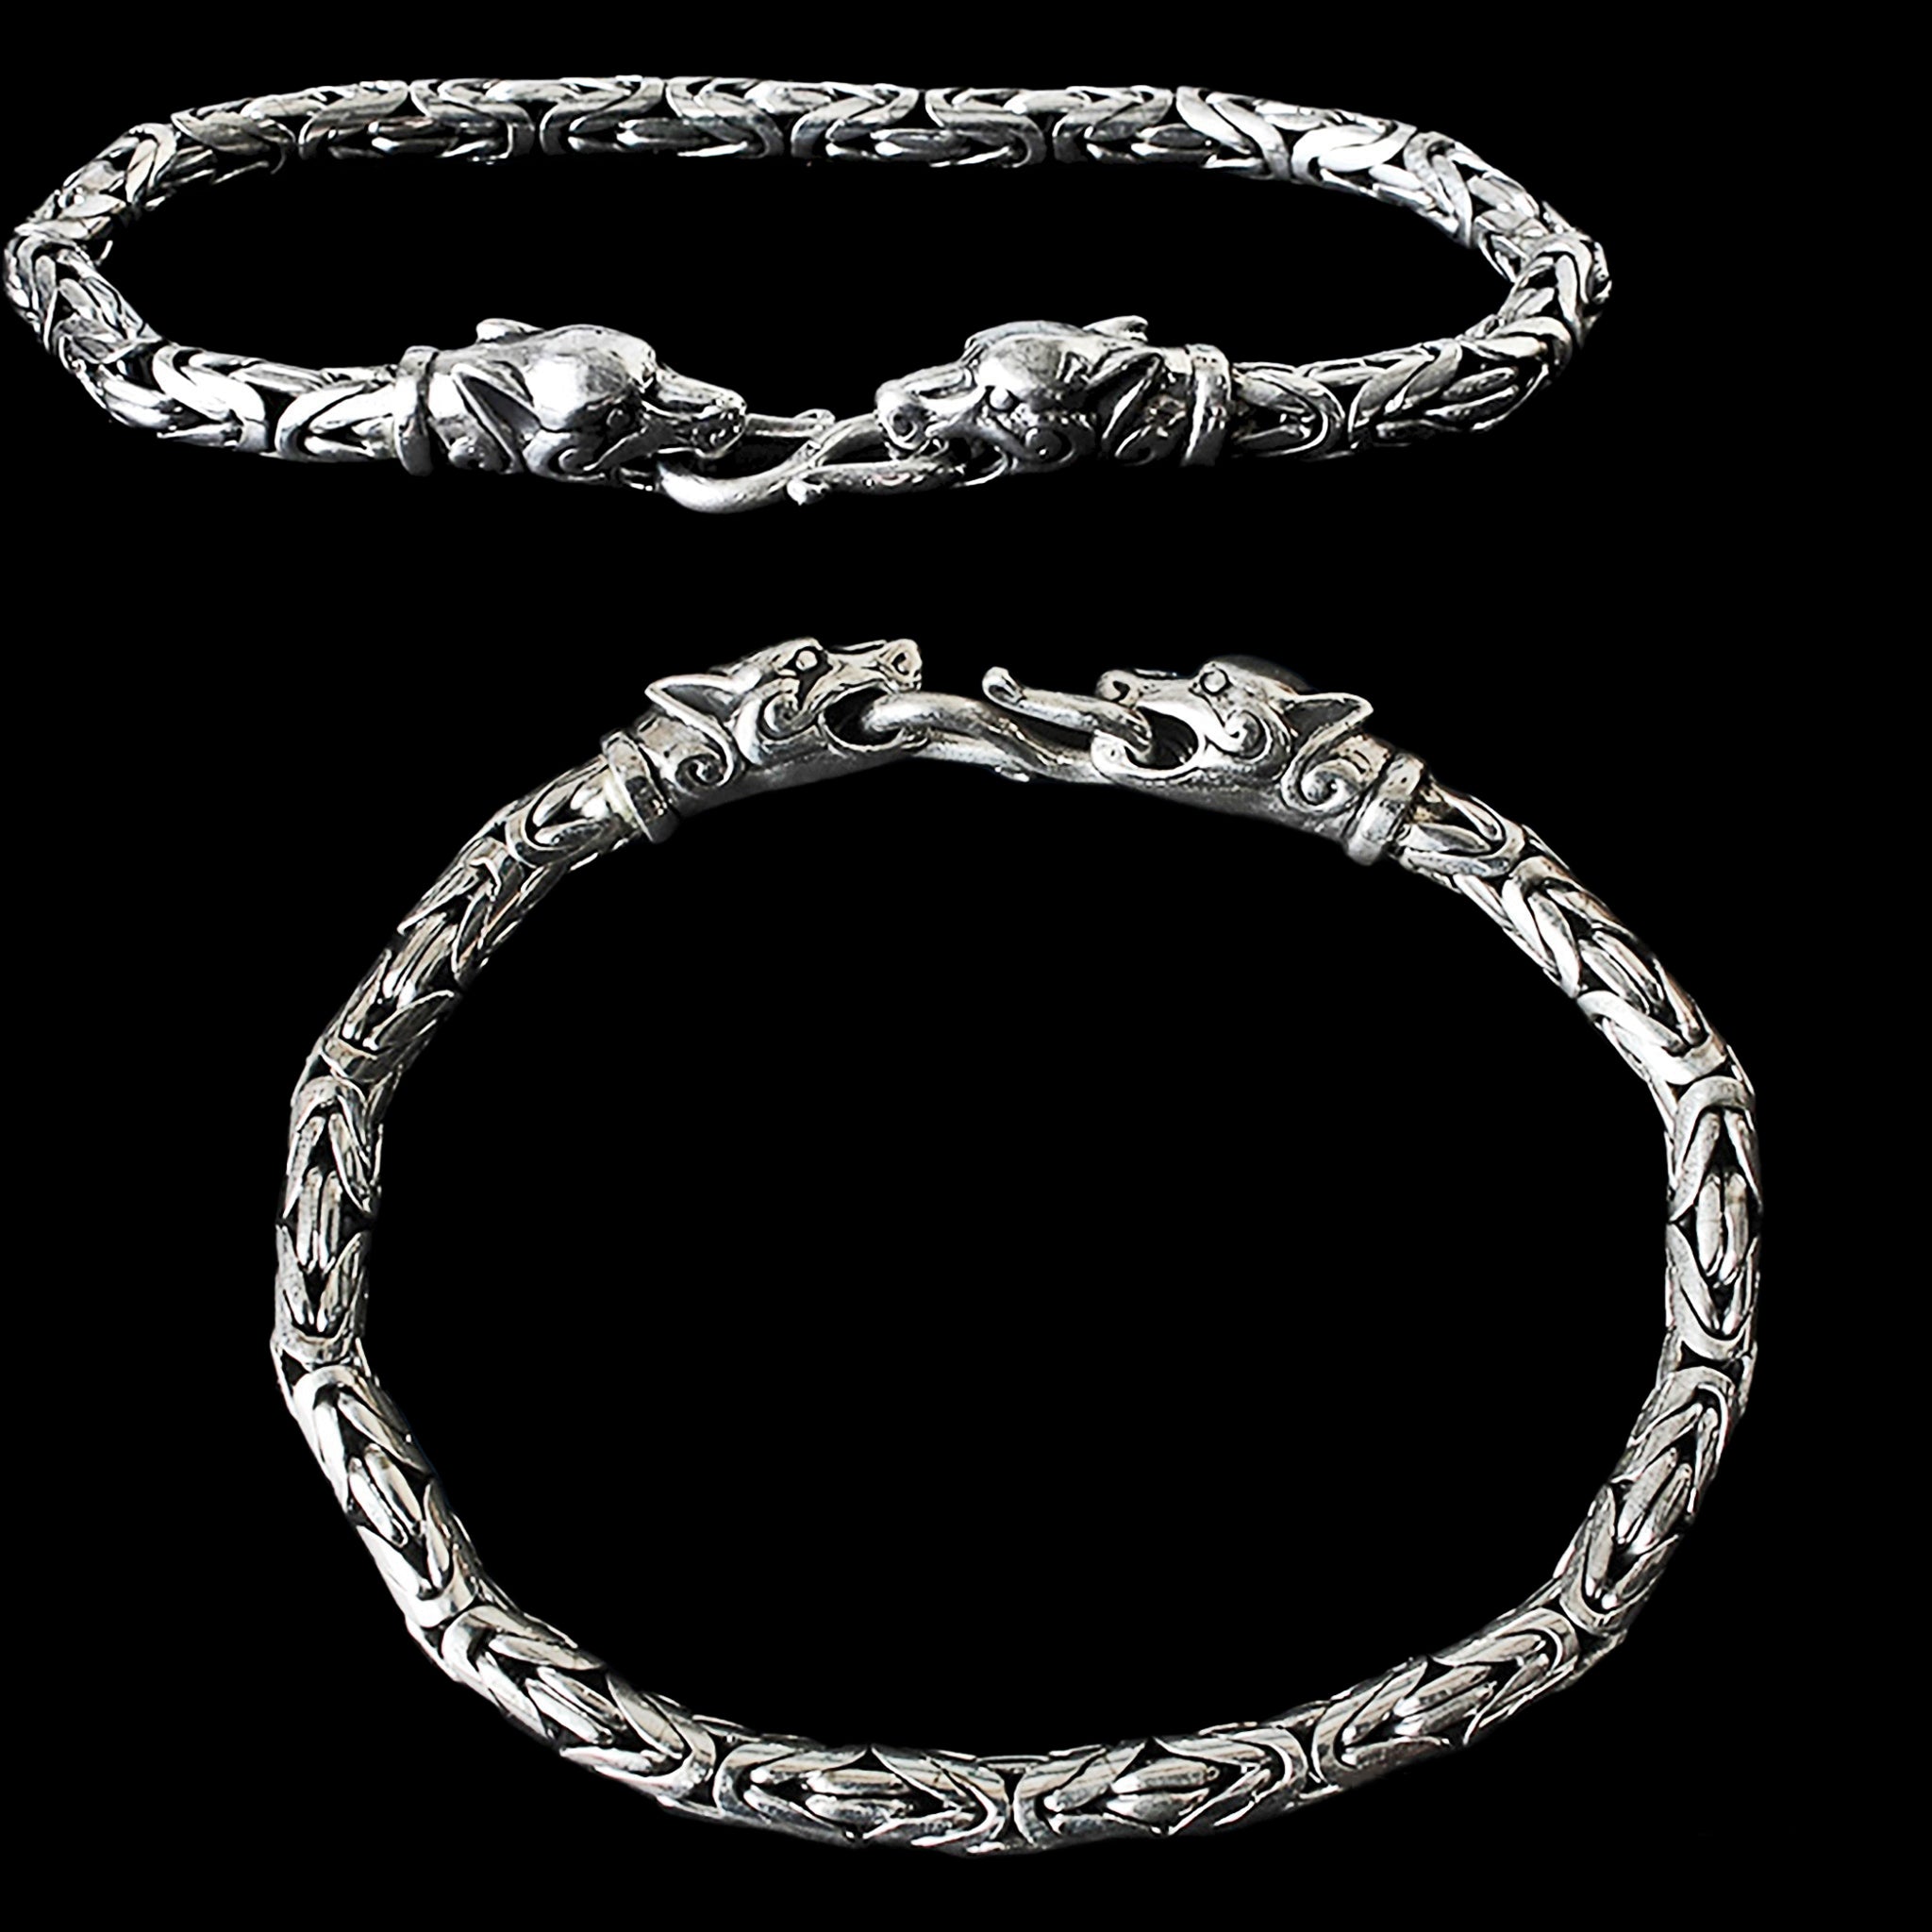 5mm Silver Viking King Chain Bracelet With Ferocious Wolf Heads - Viking Bracelets